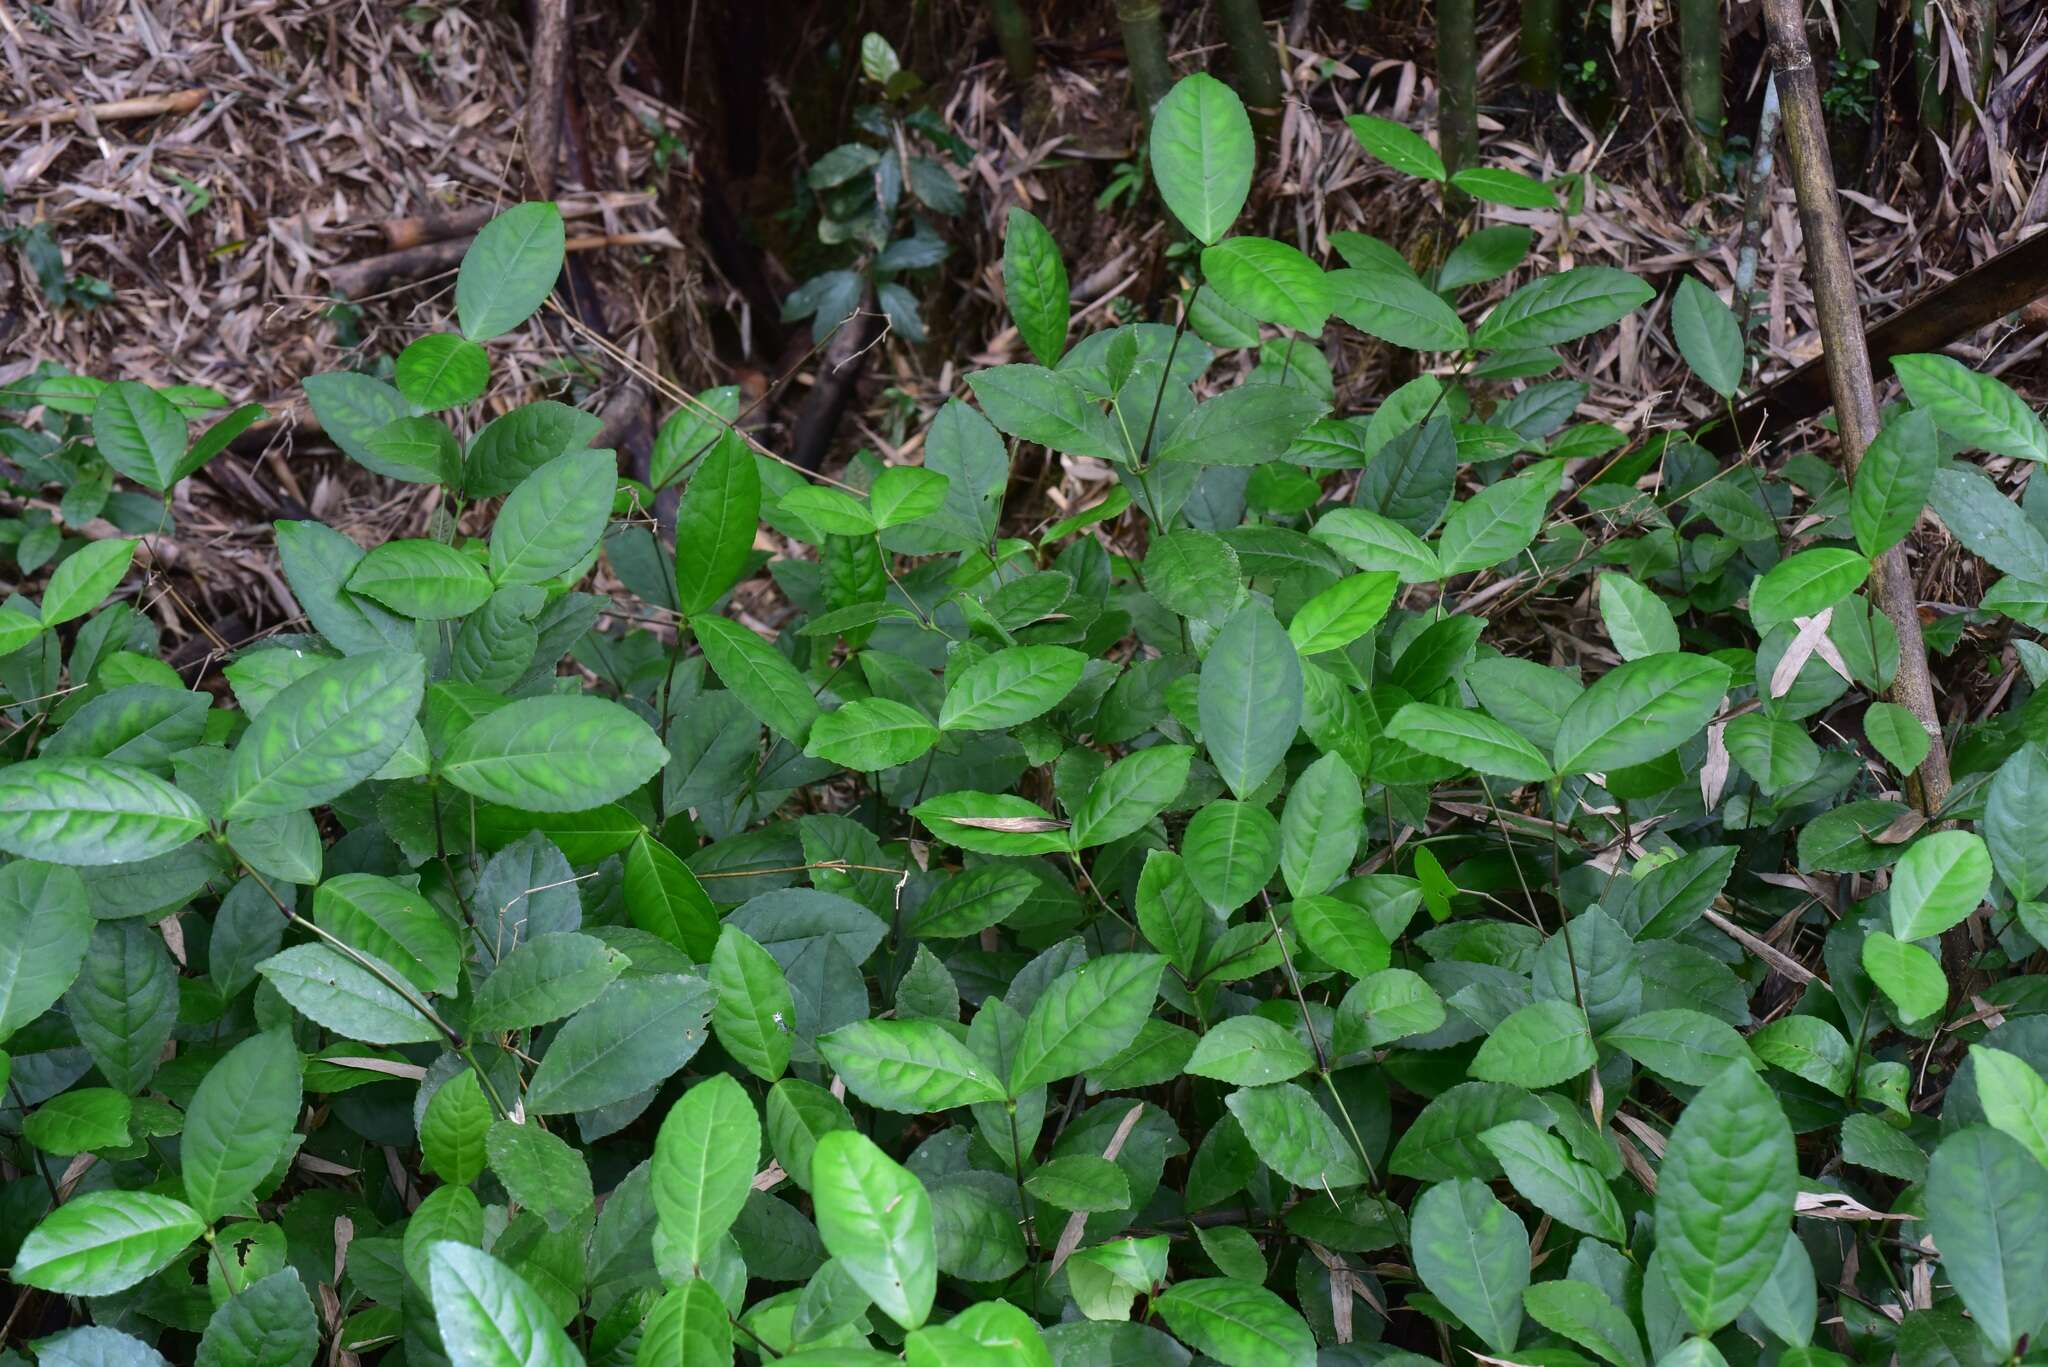 Chloranthus resmi